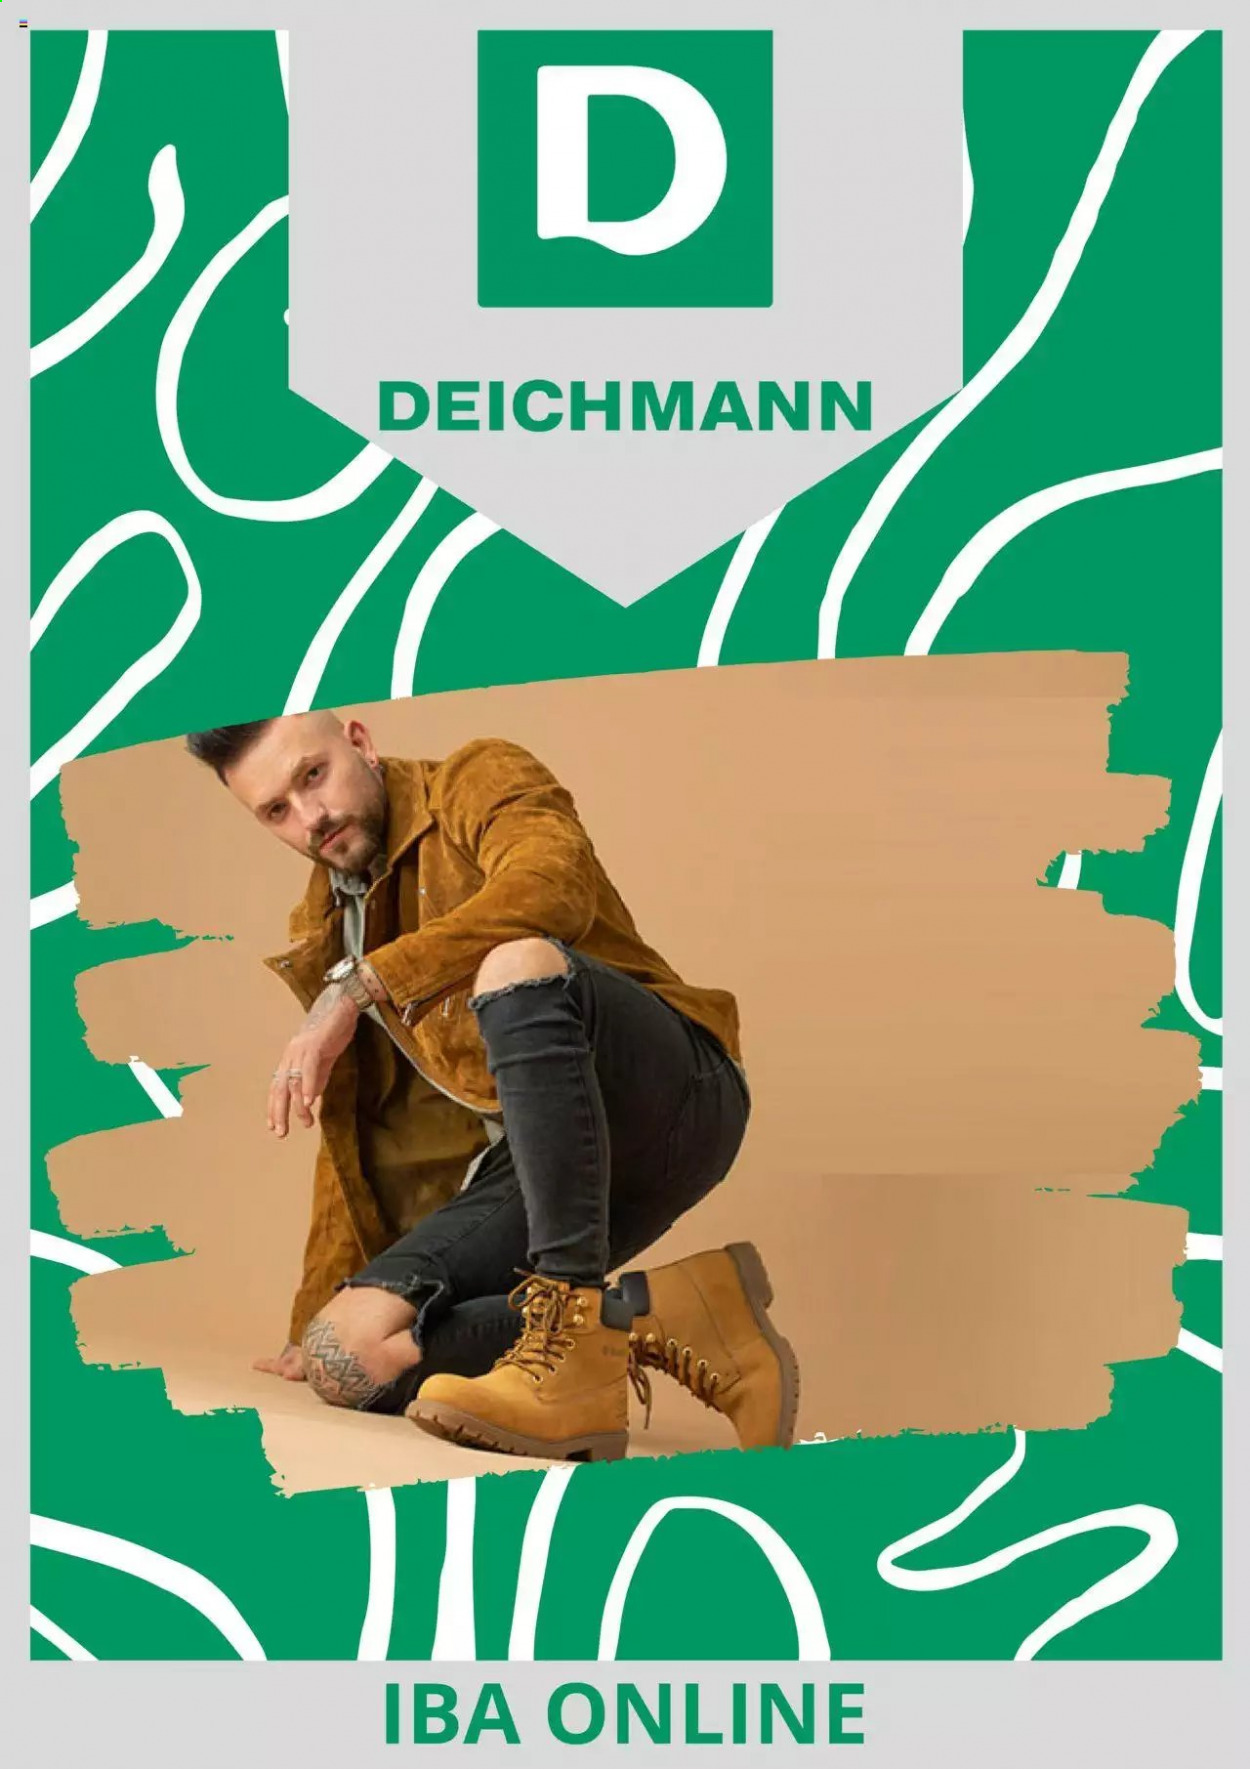 Leták Deichmann.